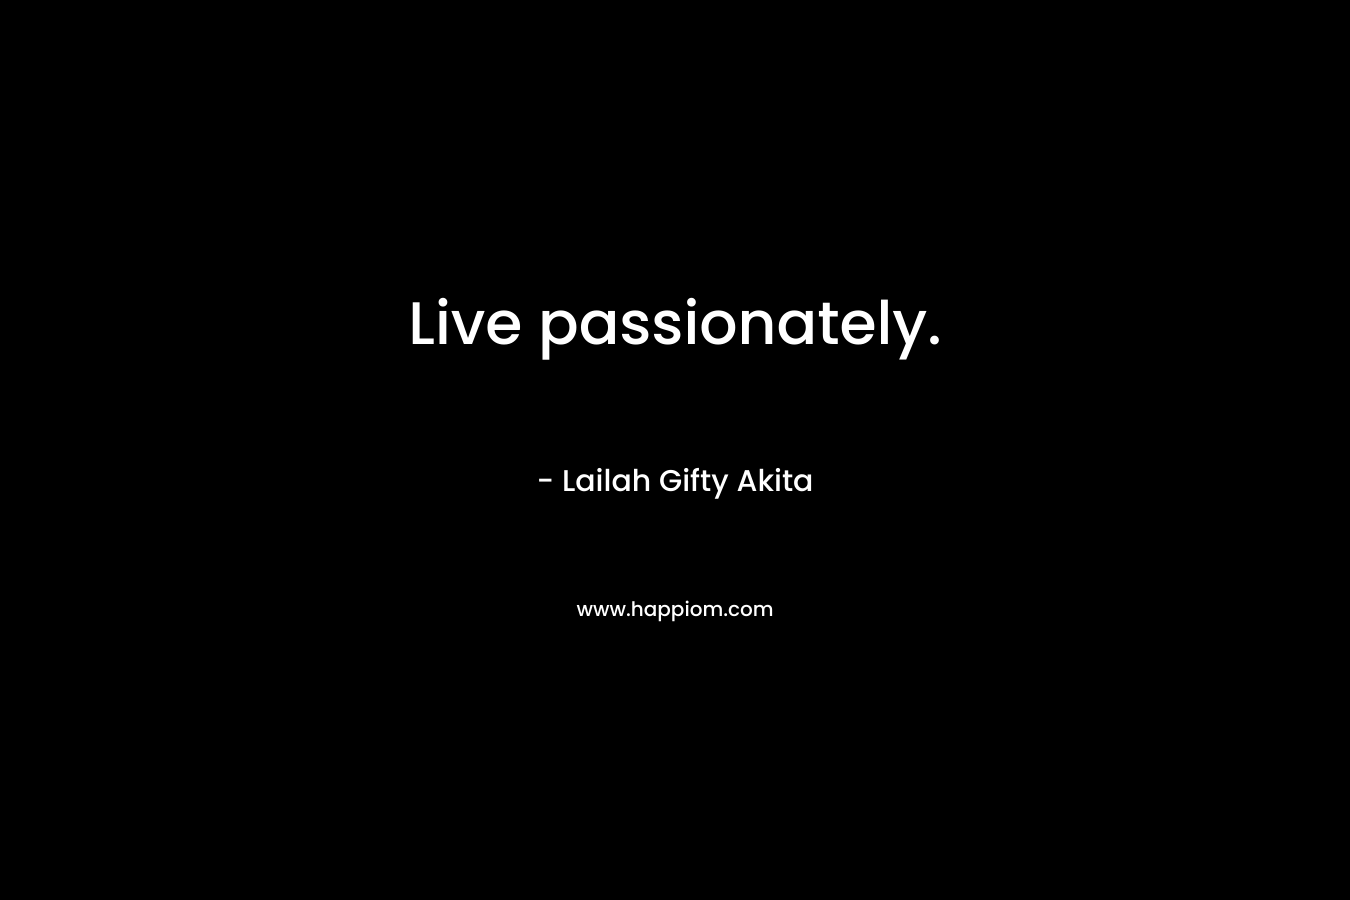 Live passionately.